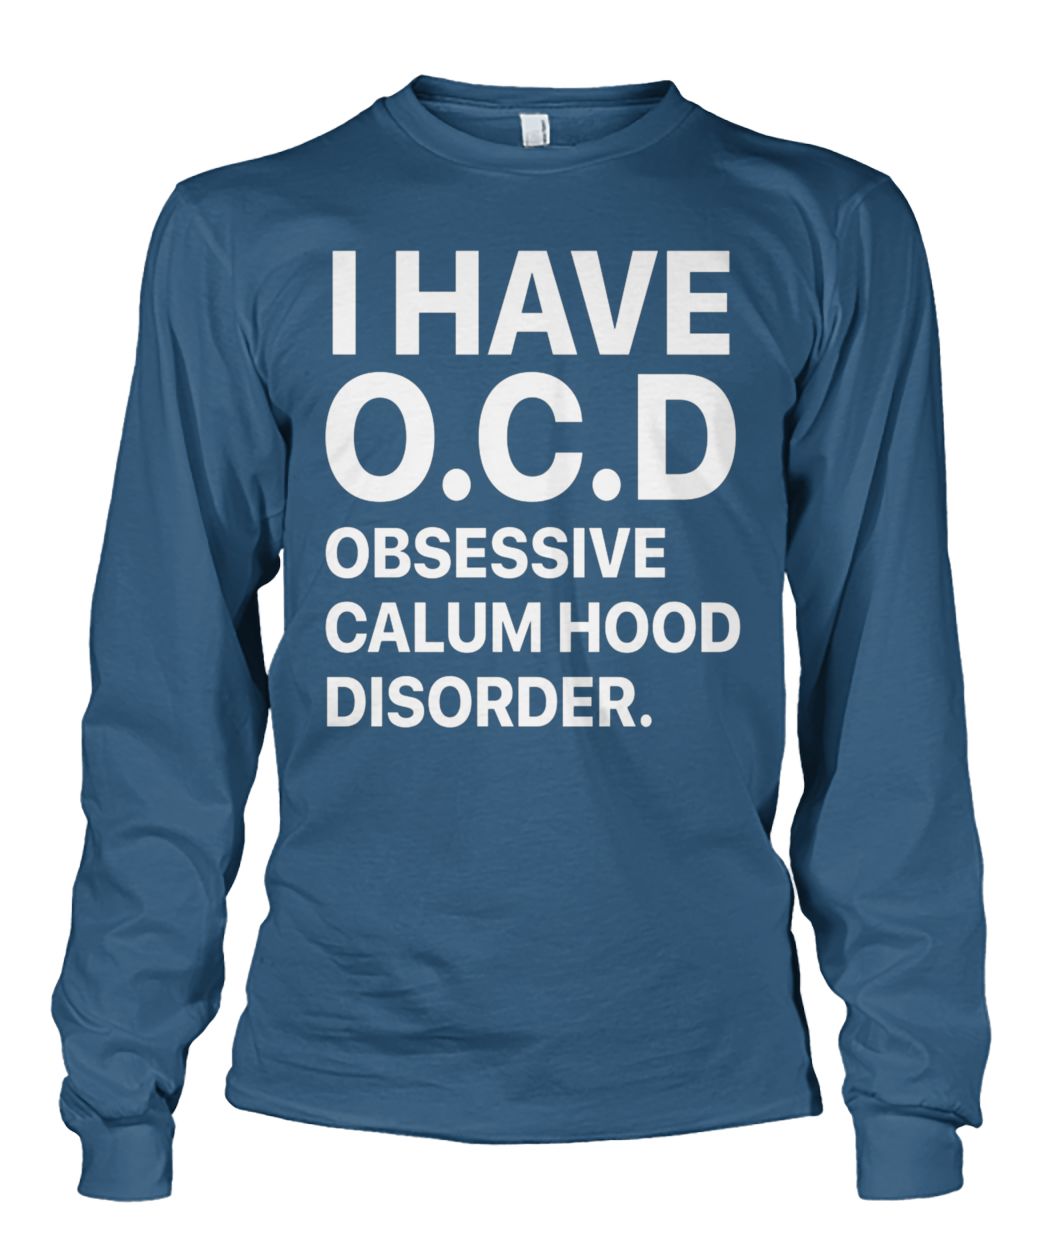 I have ocd obsessive calum hood disorder unisex long sleeve